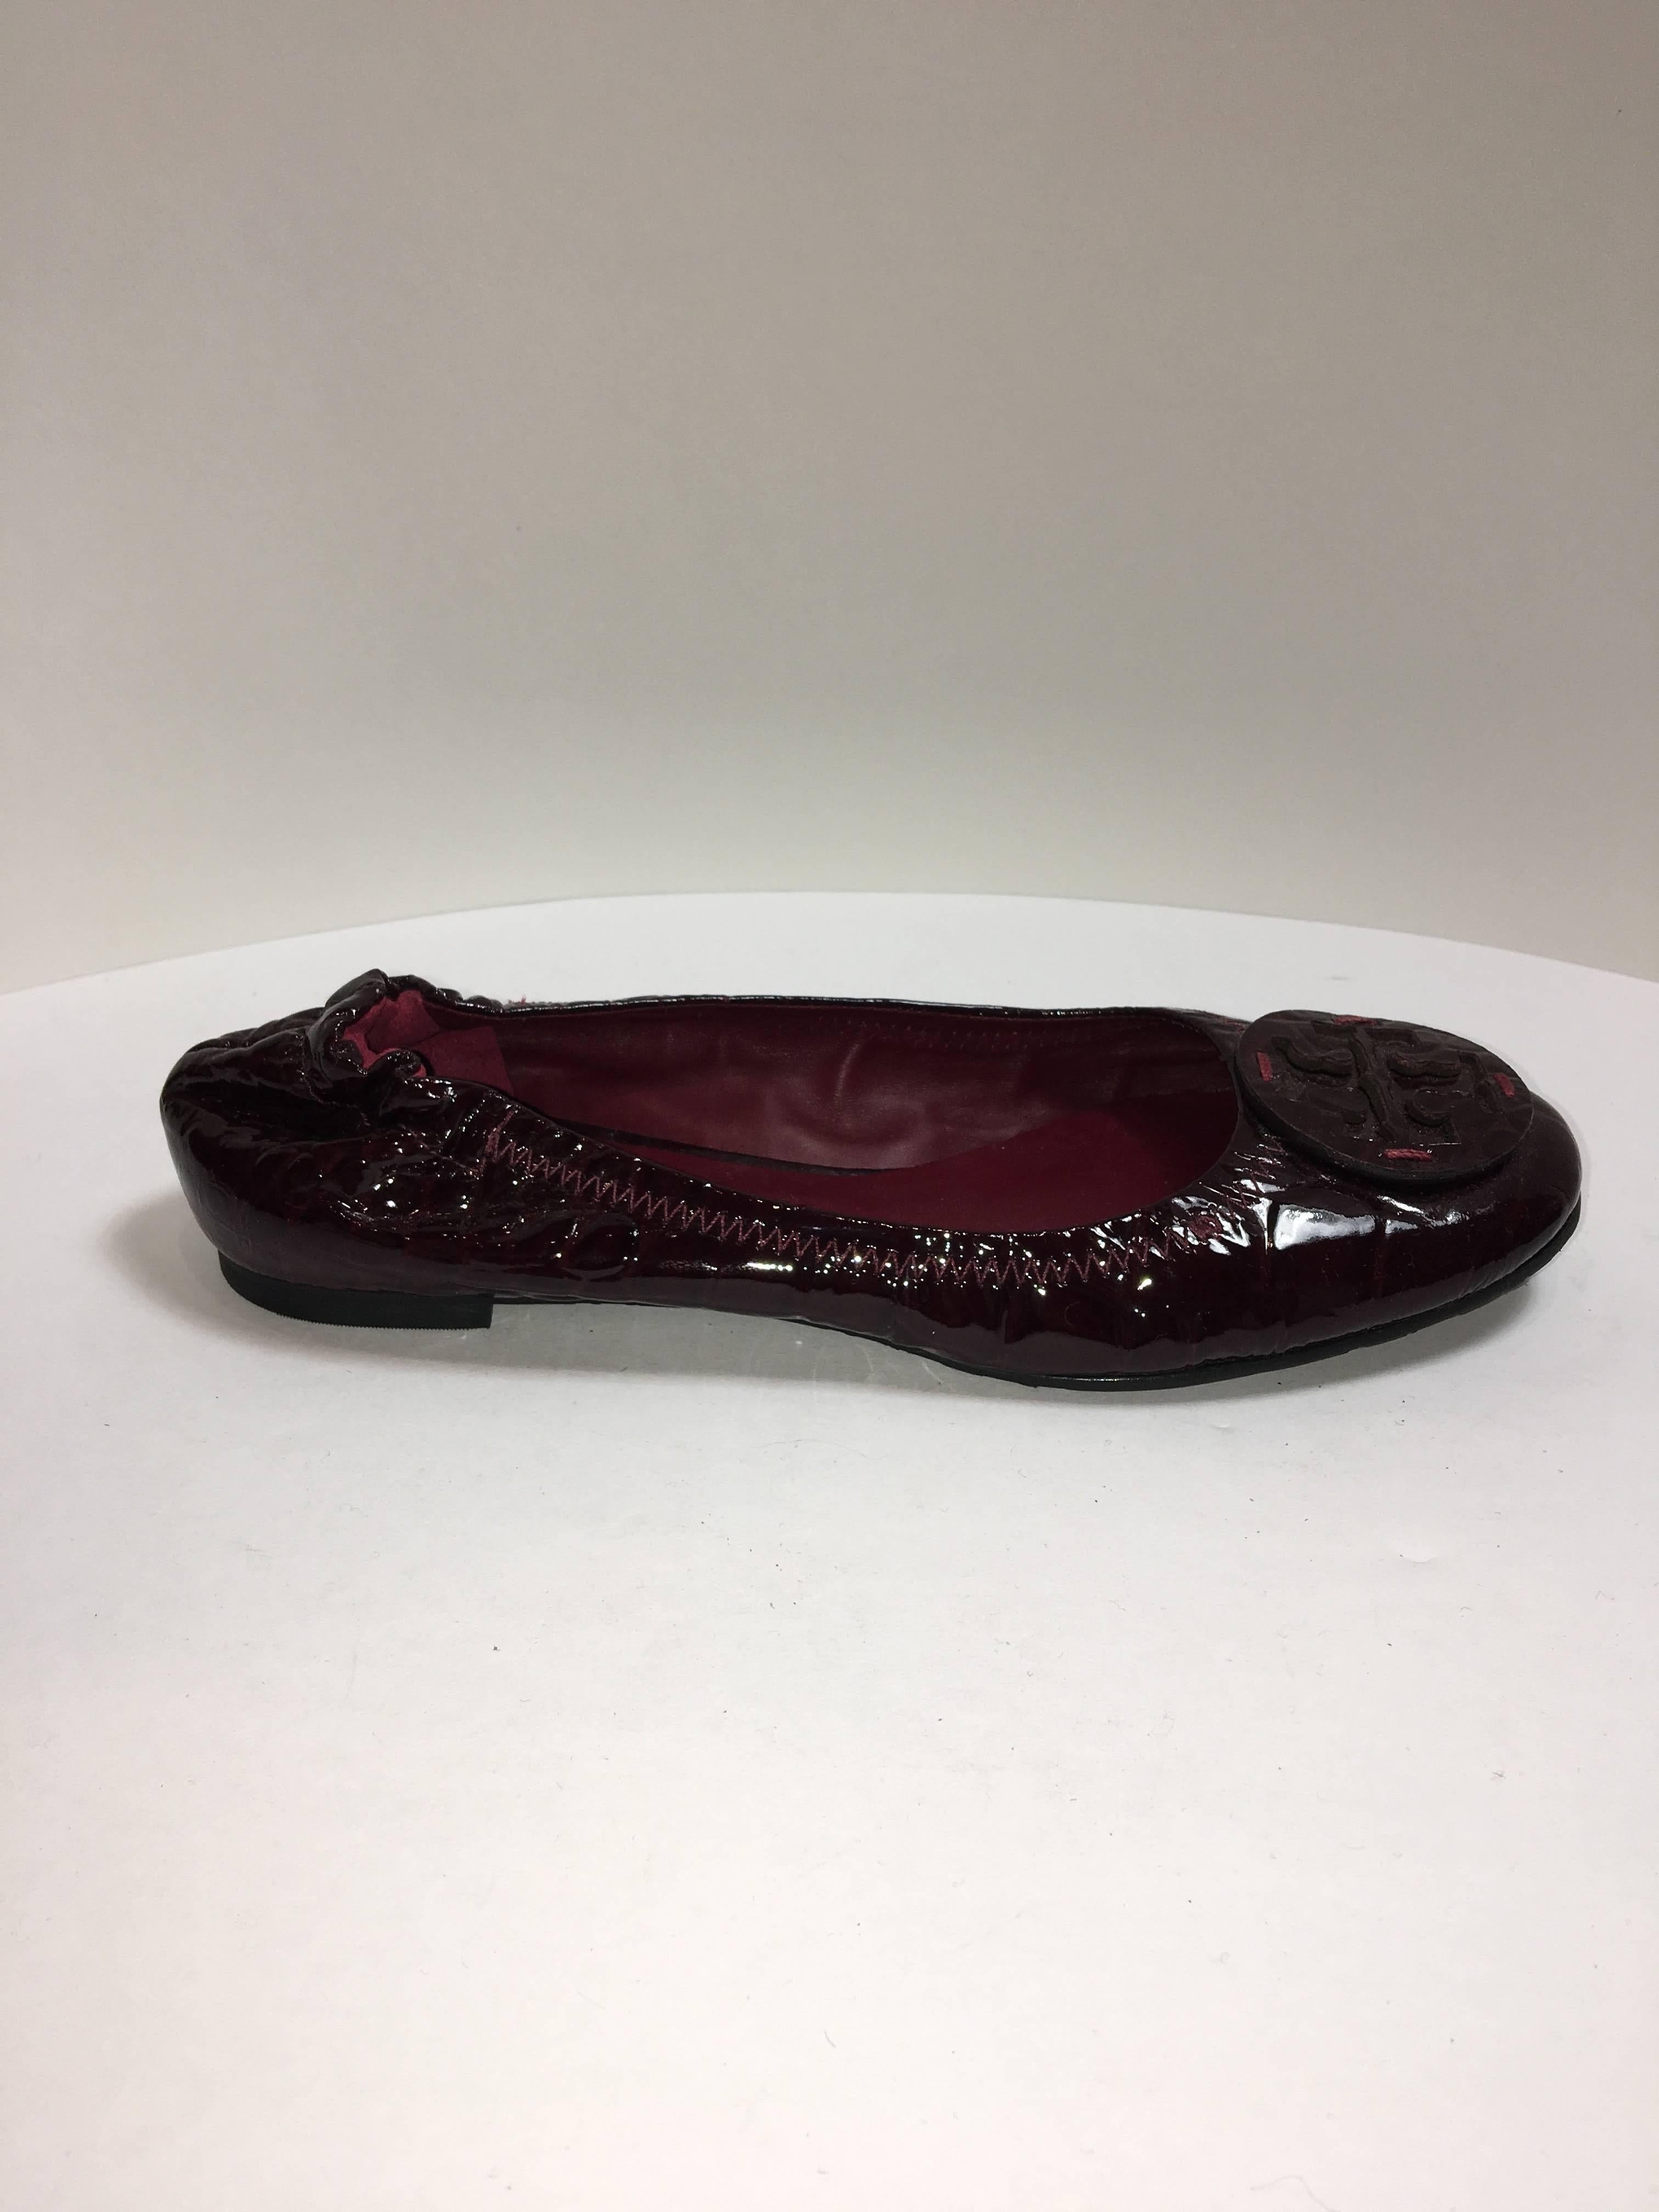 Maroon Patent Leather "Riva" Ballet Flat. 